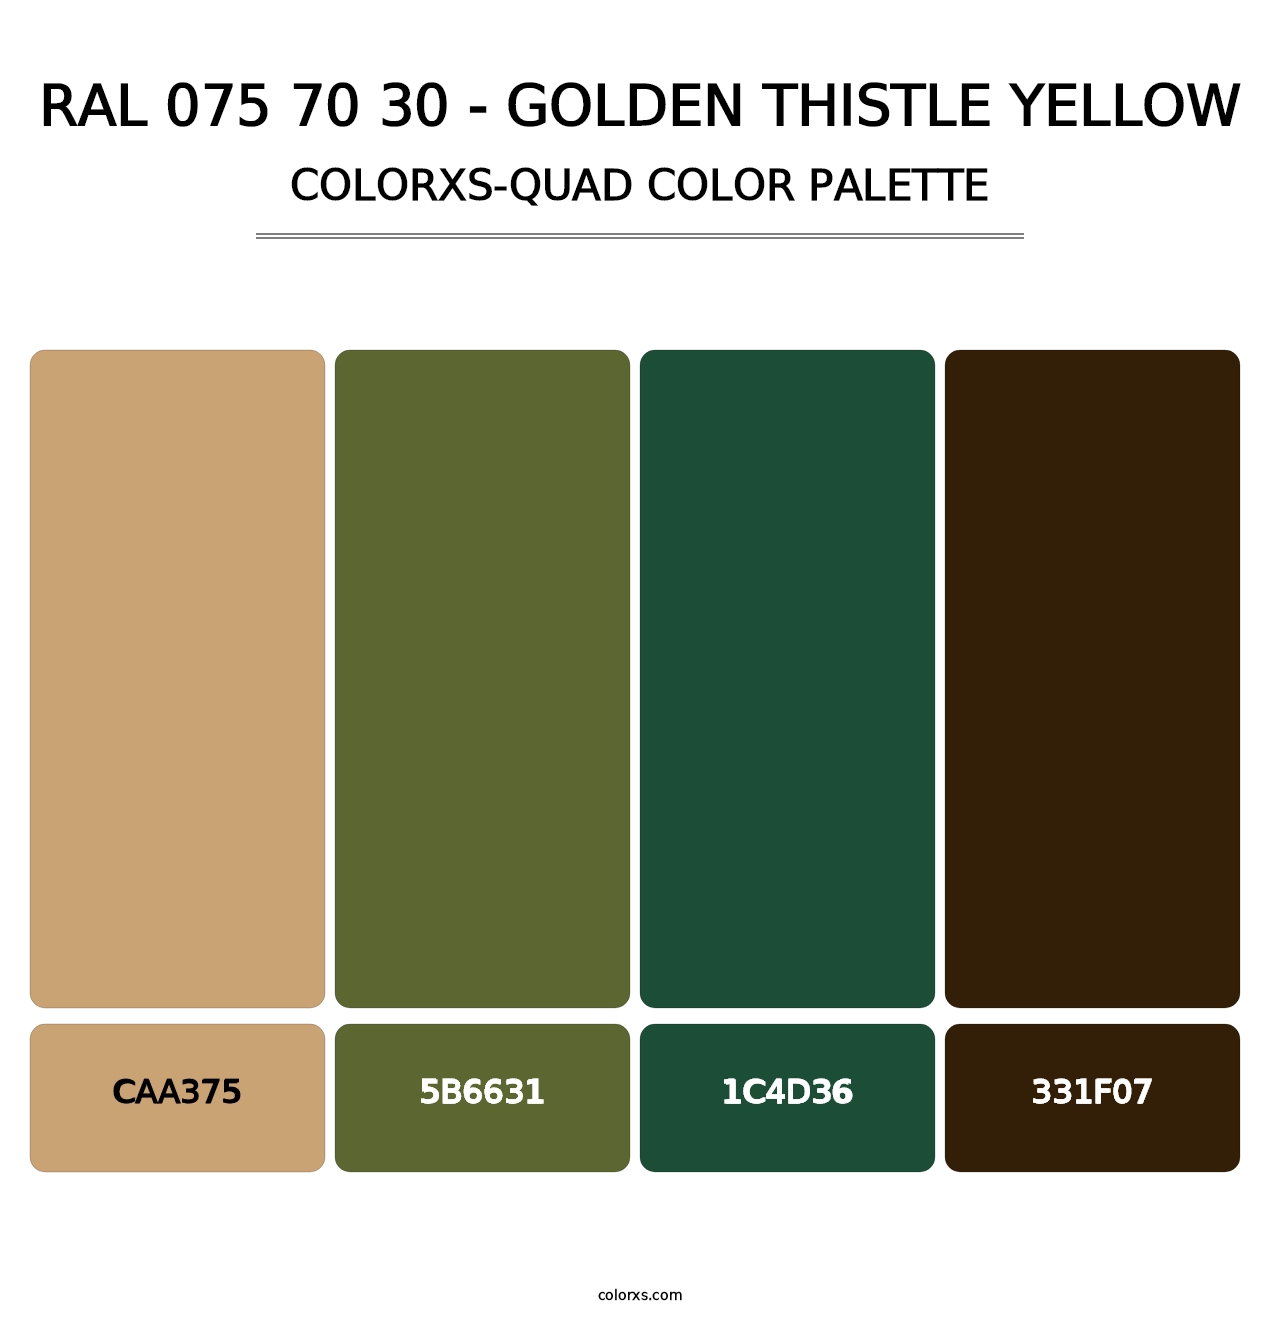 RAL 075 70 30 - Golden Thistle Yellow - Colorxs Quad Palette